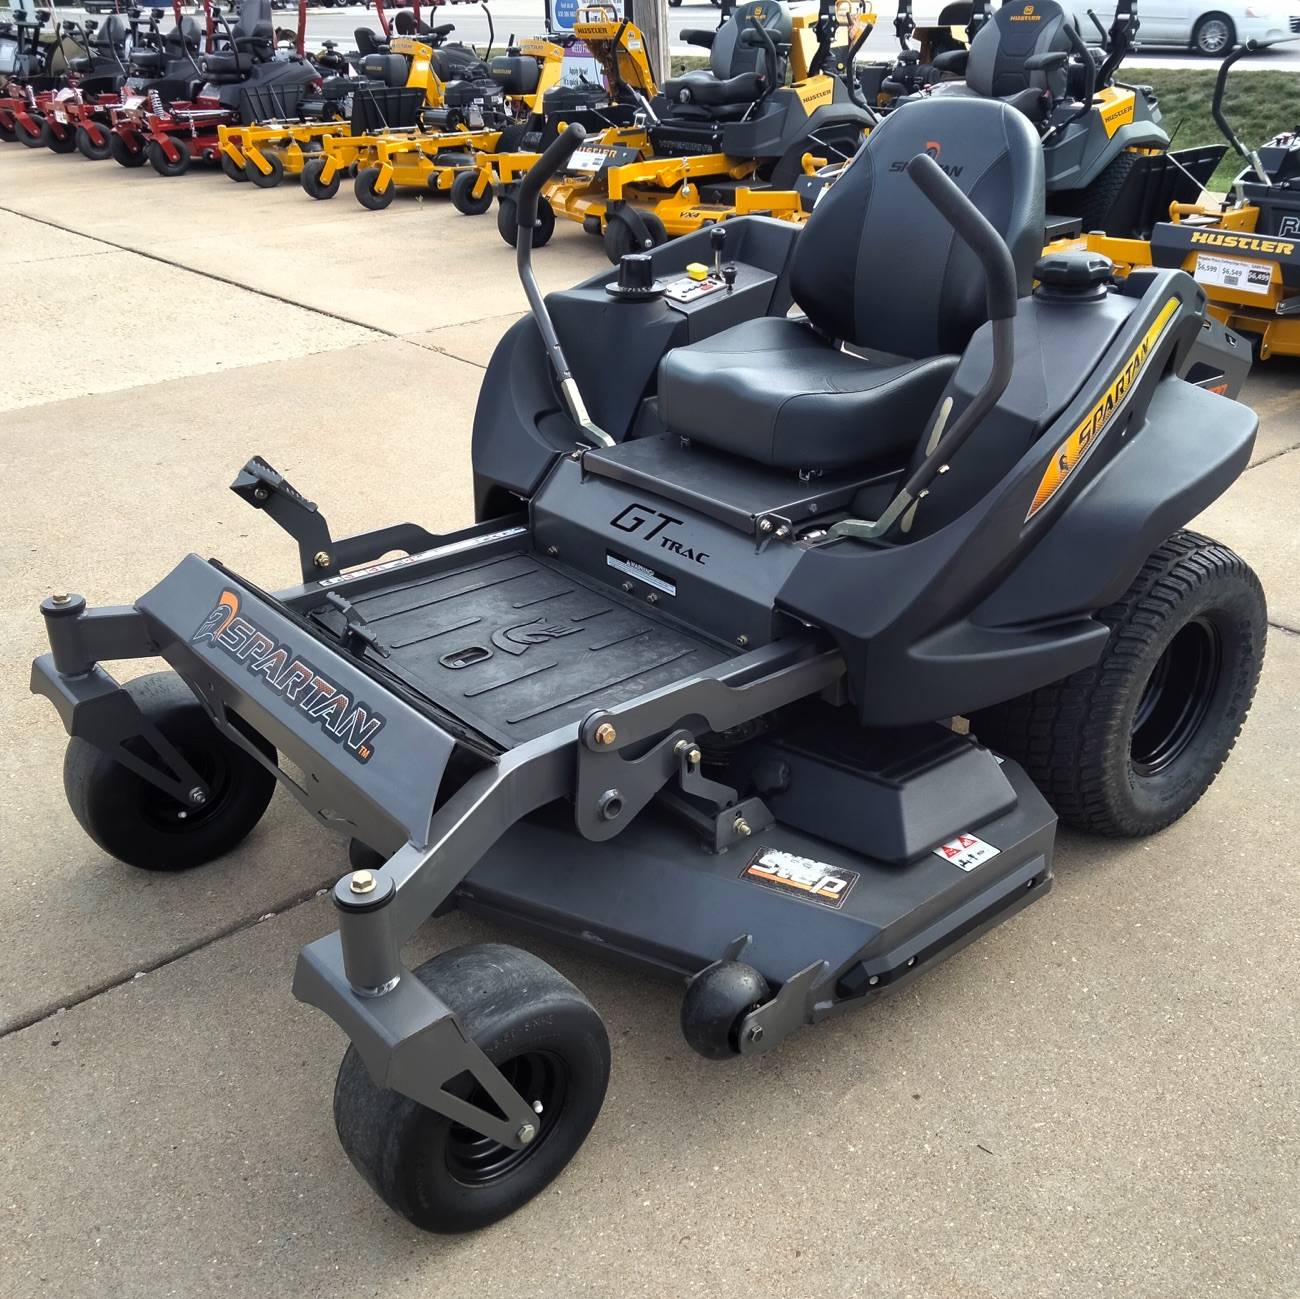 Spartan RZ Pro 48″ Commercial Zero Turn Lawn Mower + Guarantee!